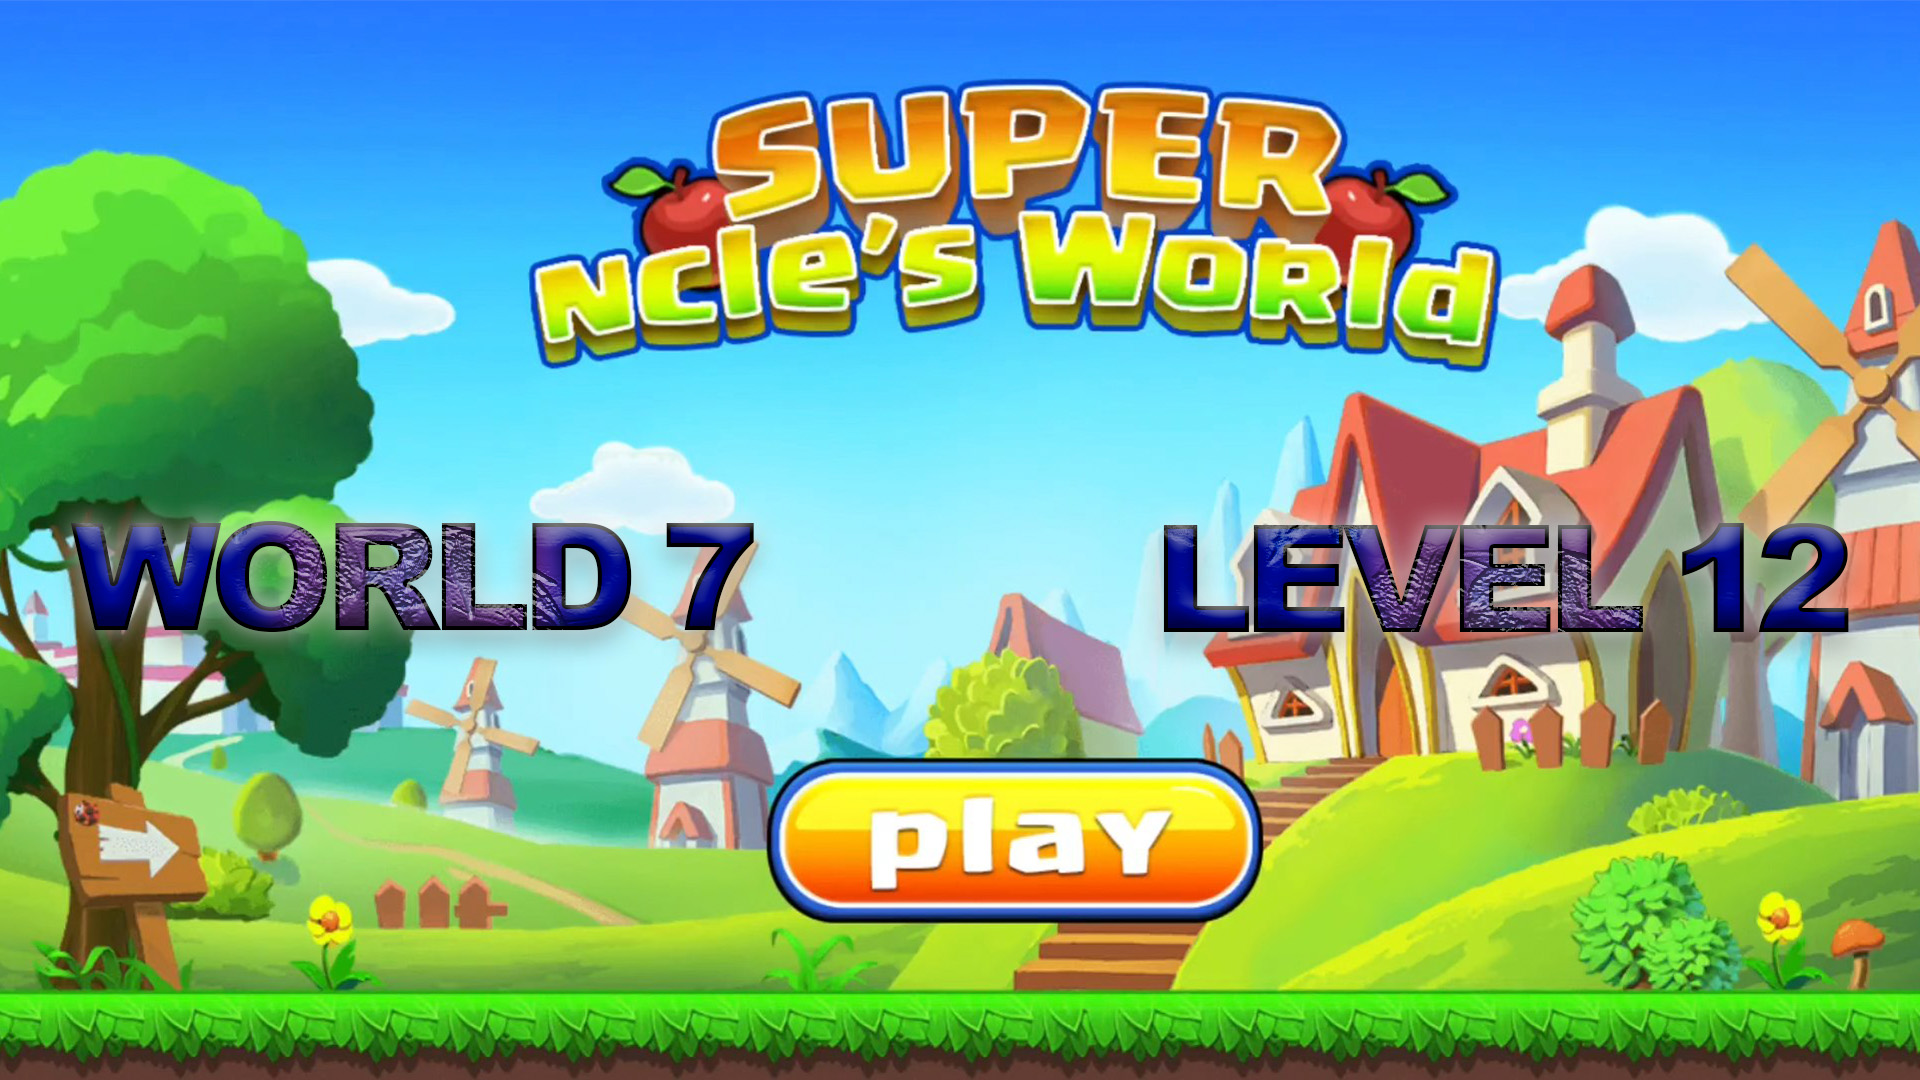 Super ncle's  World 7. Level 12.